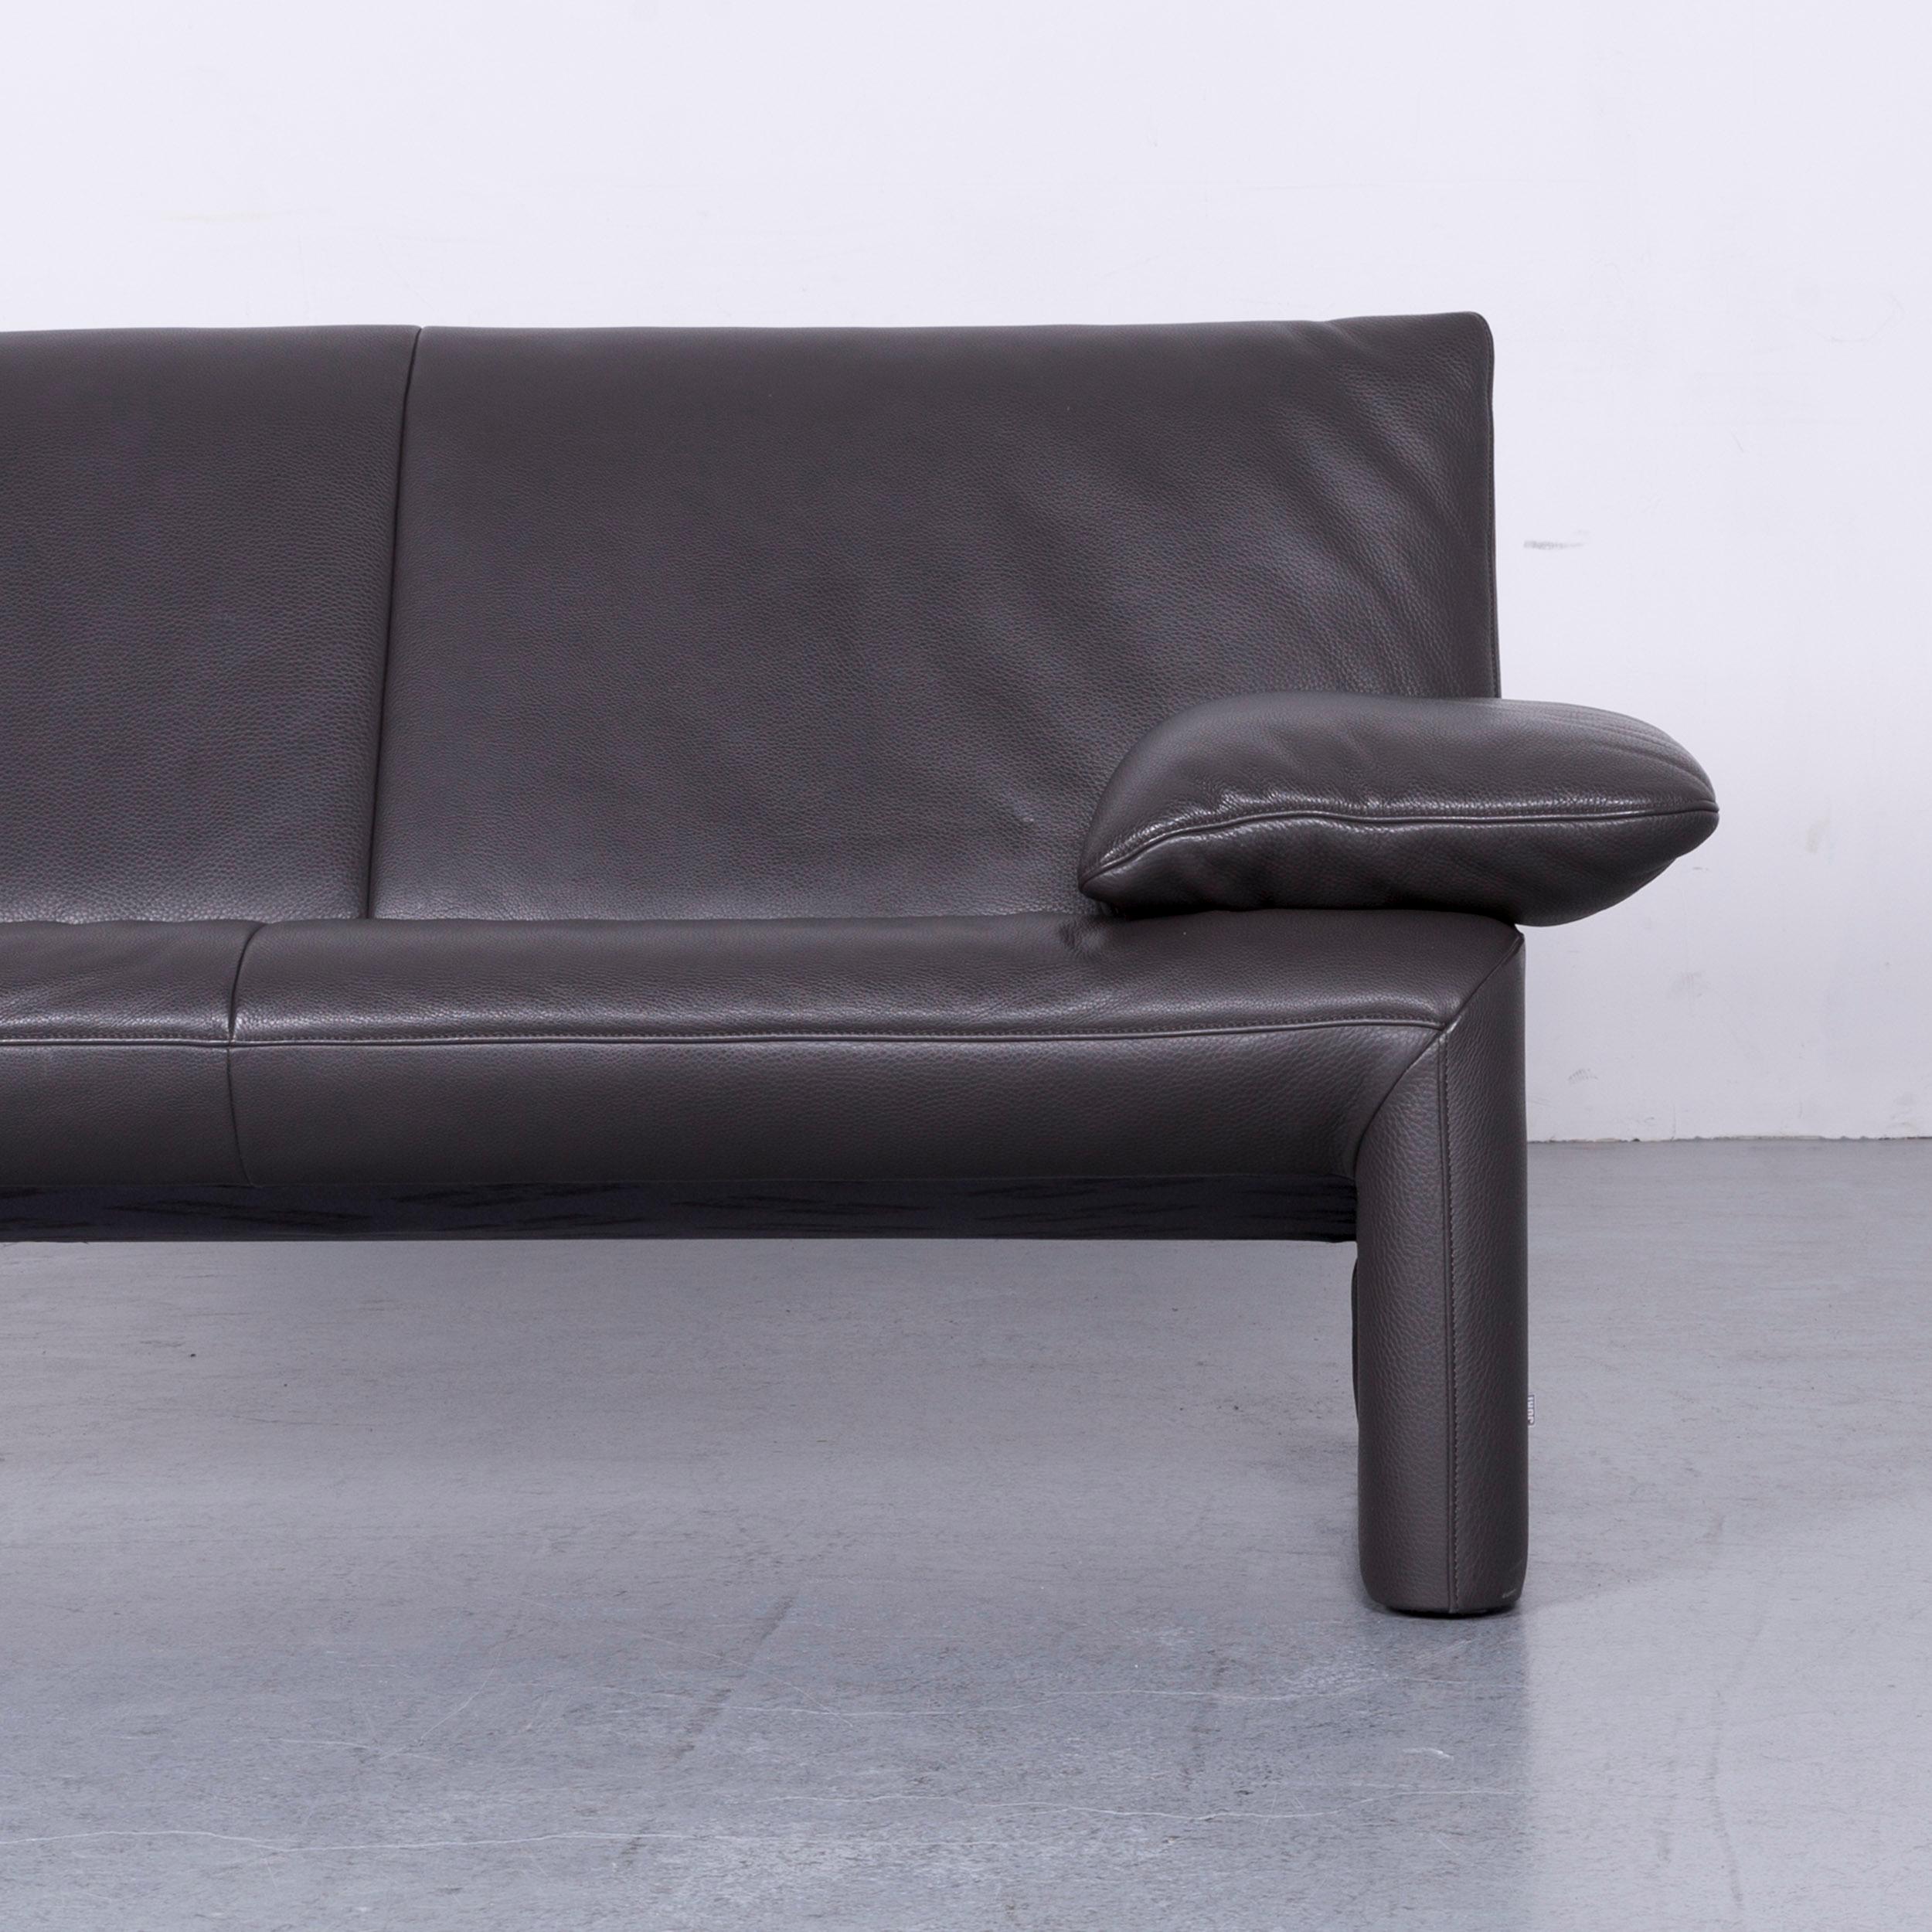 Belgian Jori Linea Designer Leather Sofa Grey Two-Seat Couch